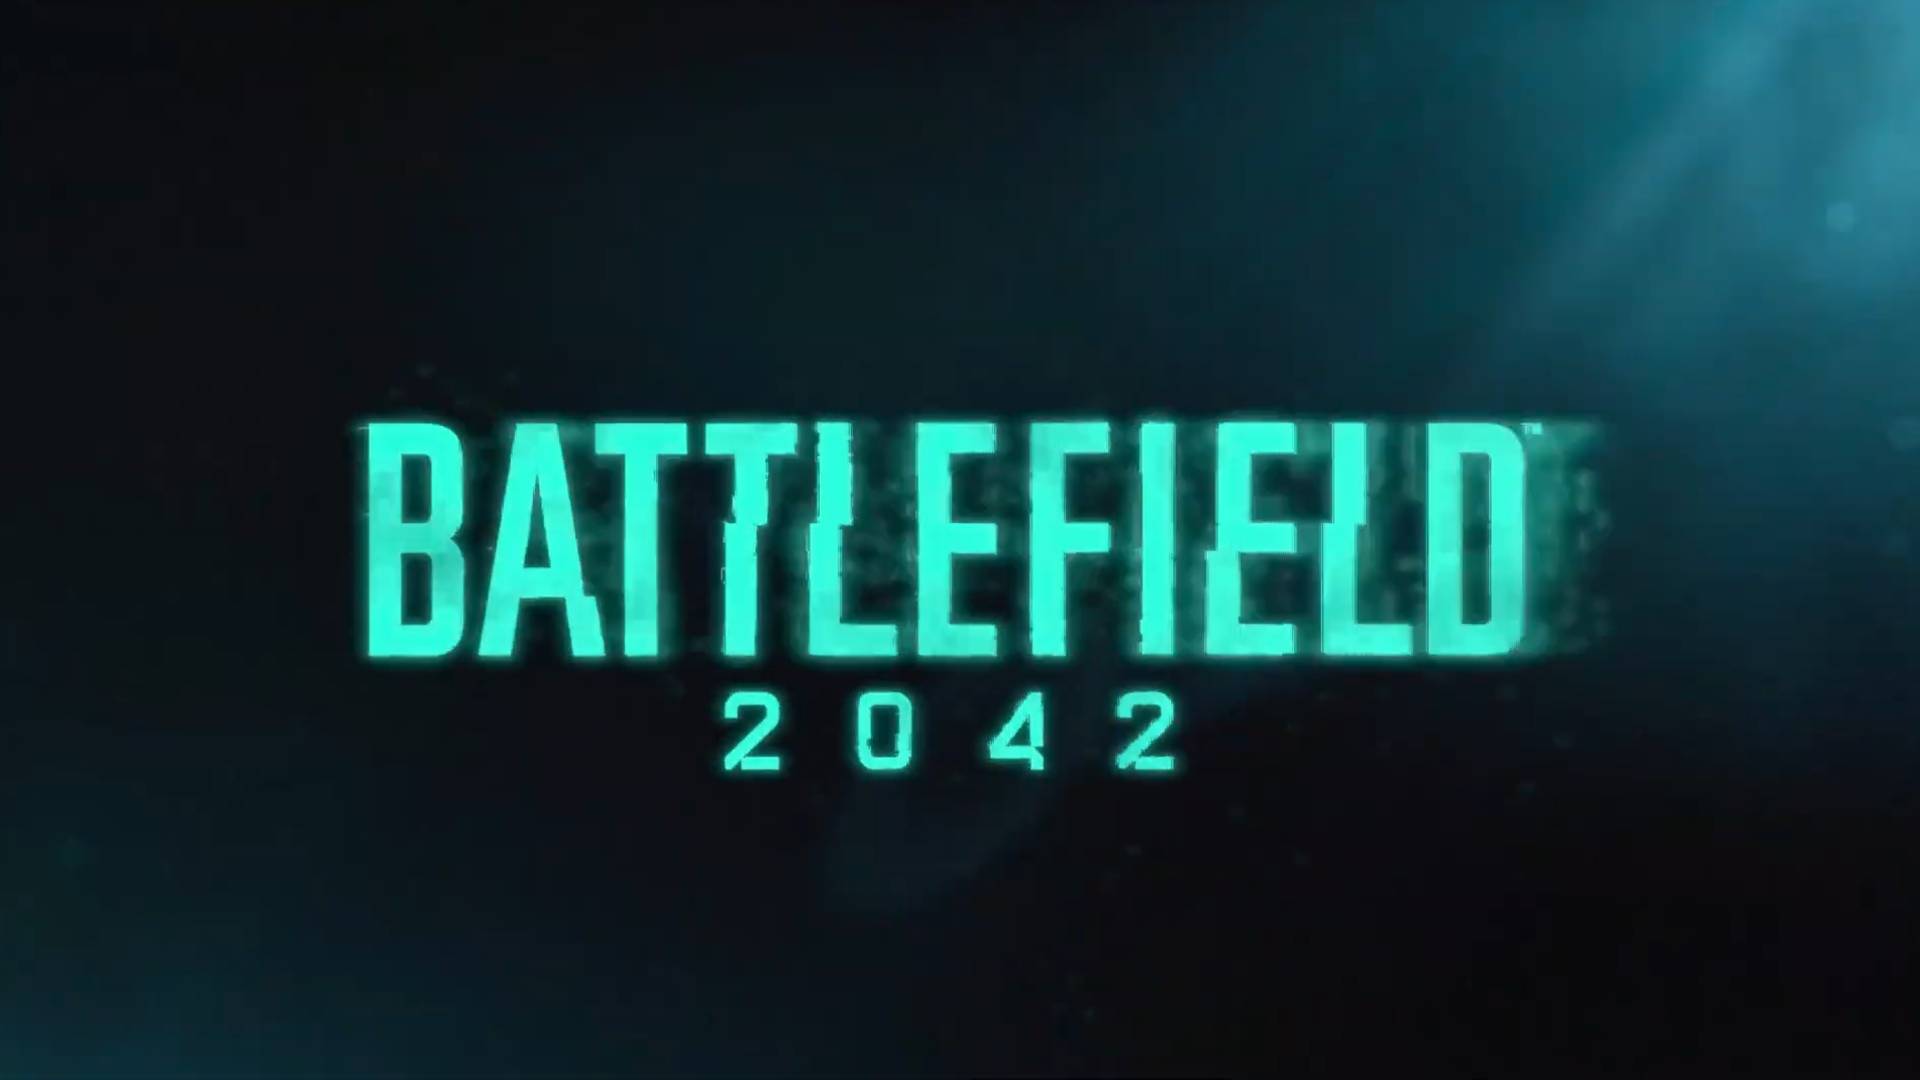 Battlefield 2042 release date set for Oct. 22, 2021